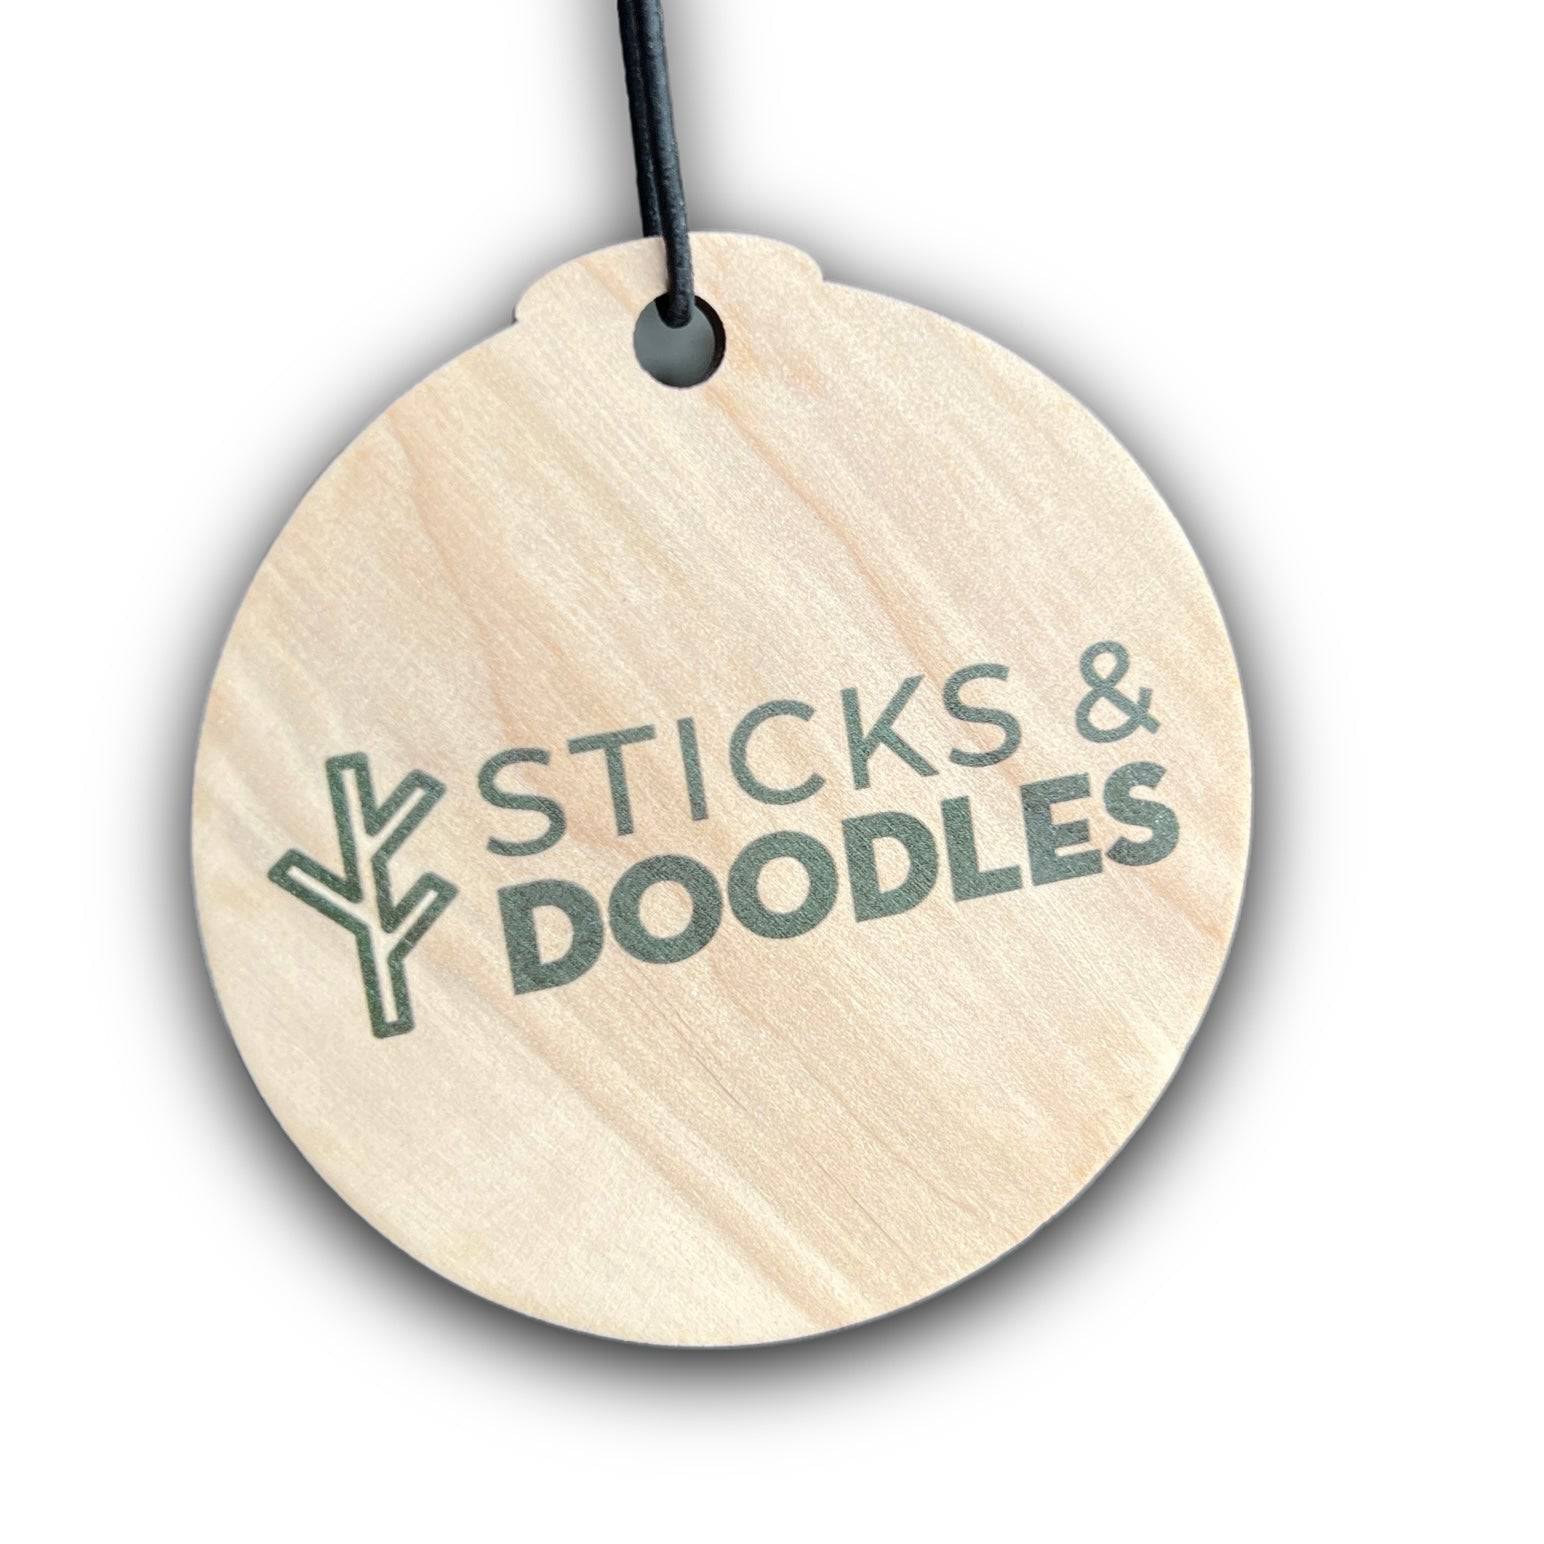 Double Sided Sticks & Doodles Car Mirror Ornament - Sticks & Doodles